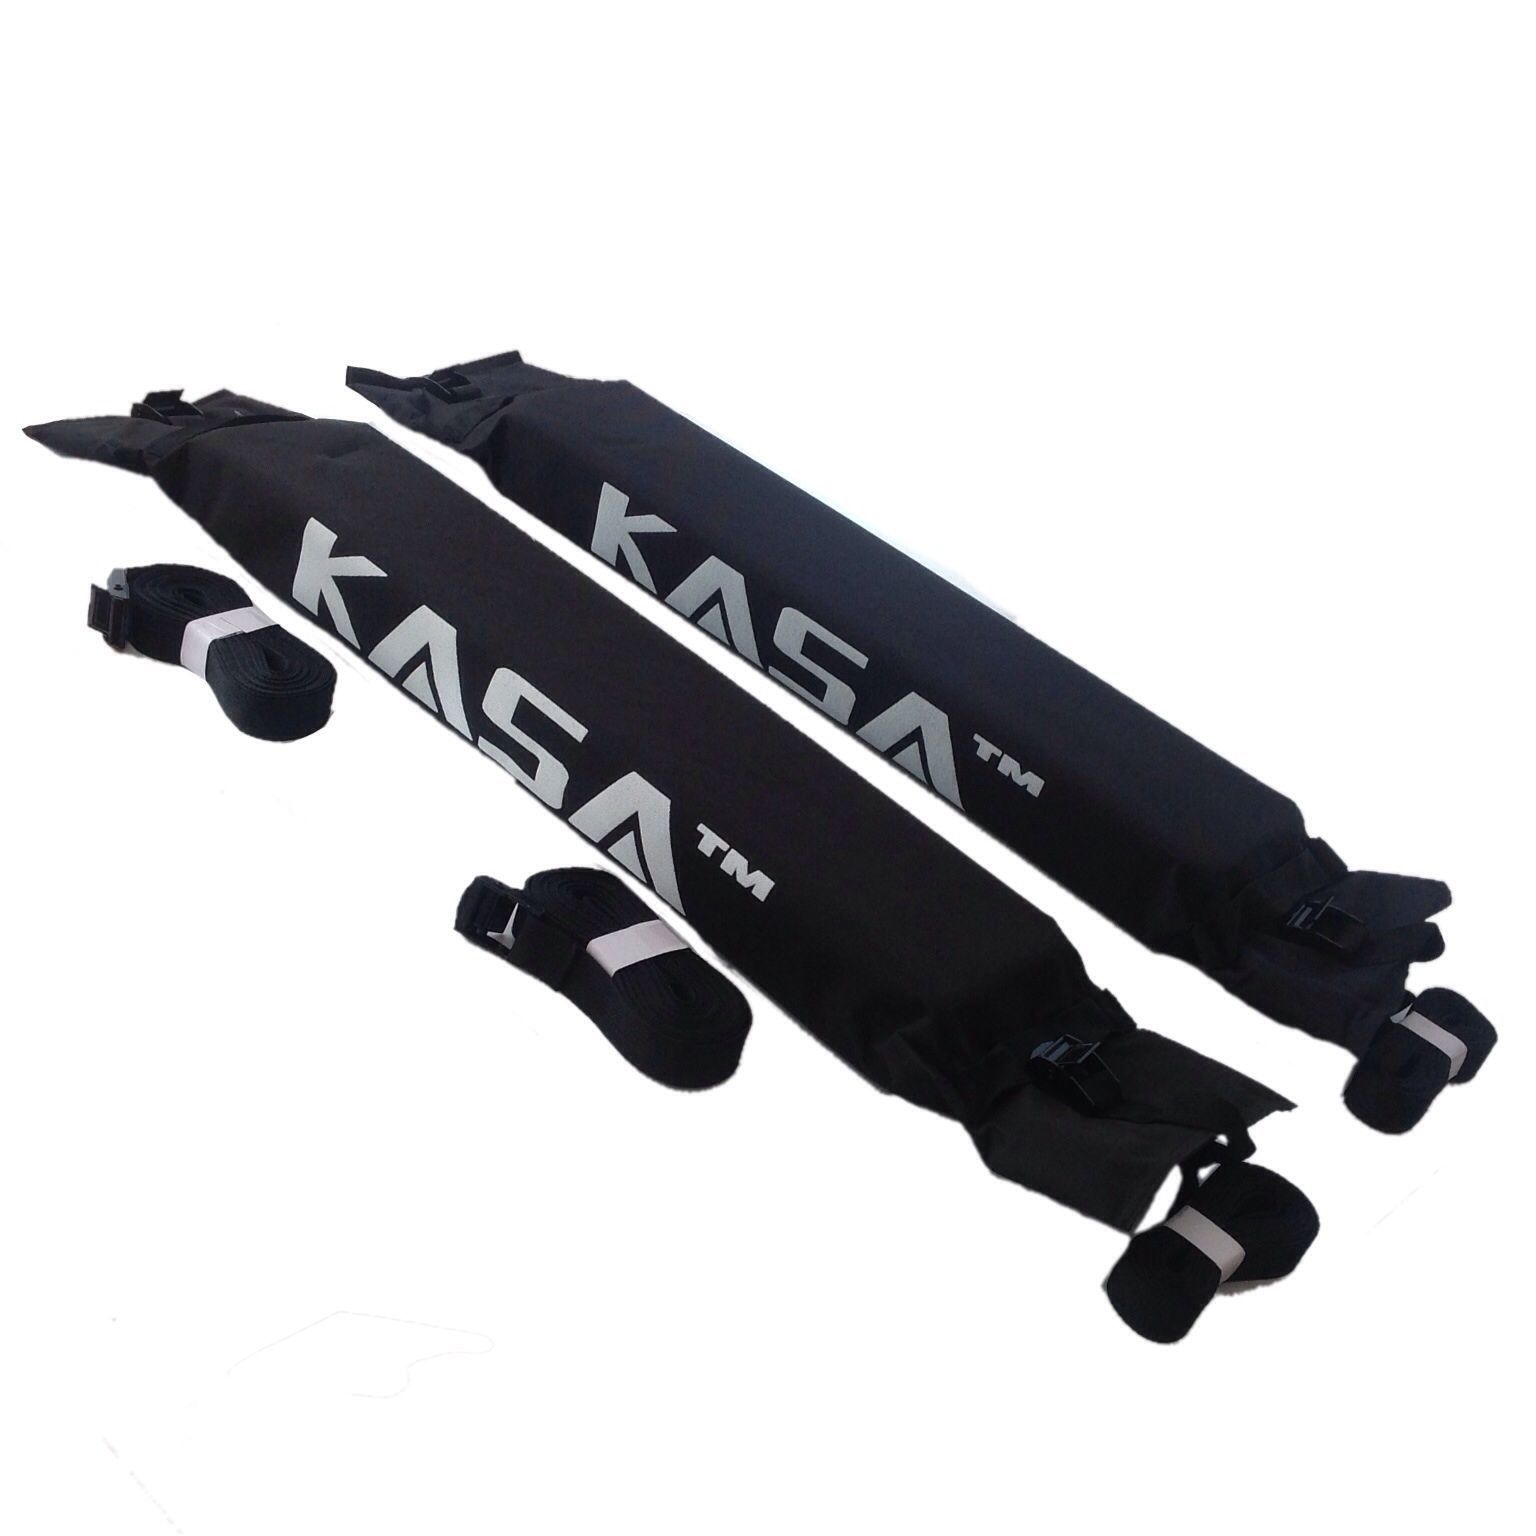 KASA Small Soft Roof Racks Car Luggage Kayak Surfboard